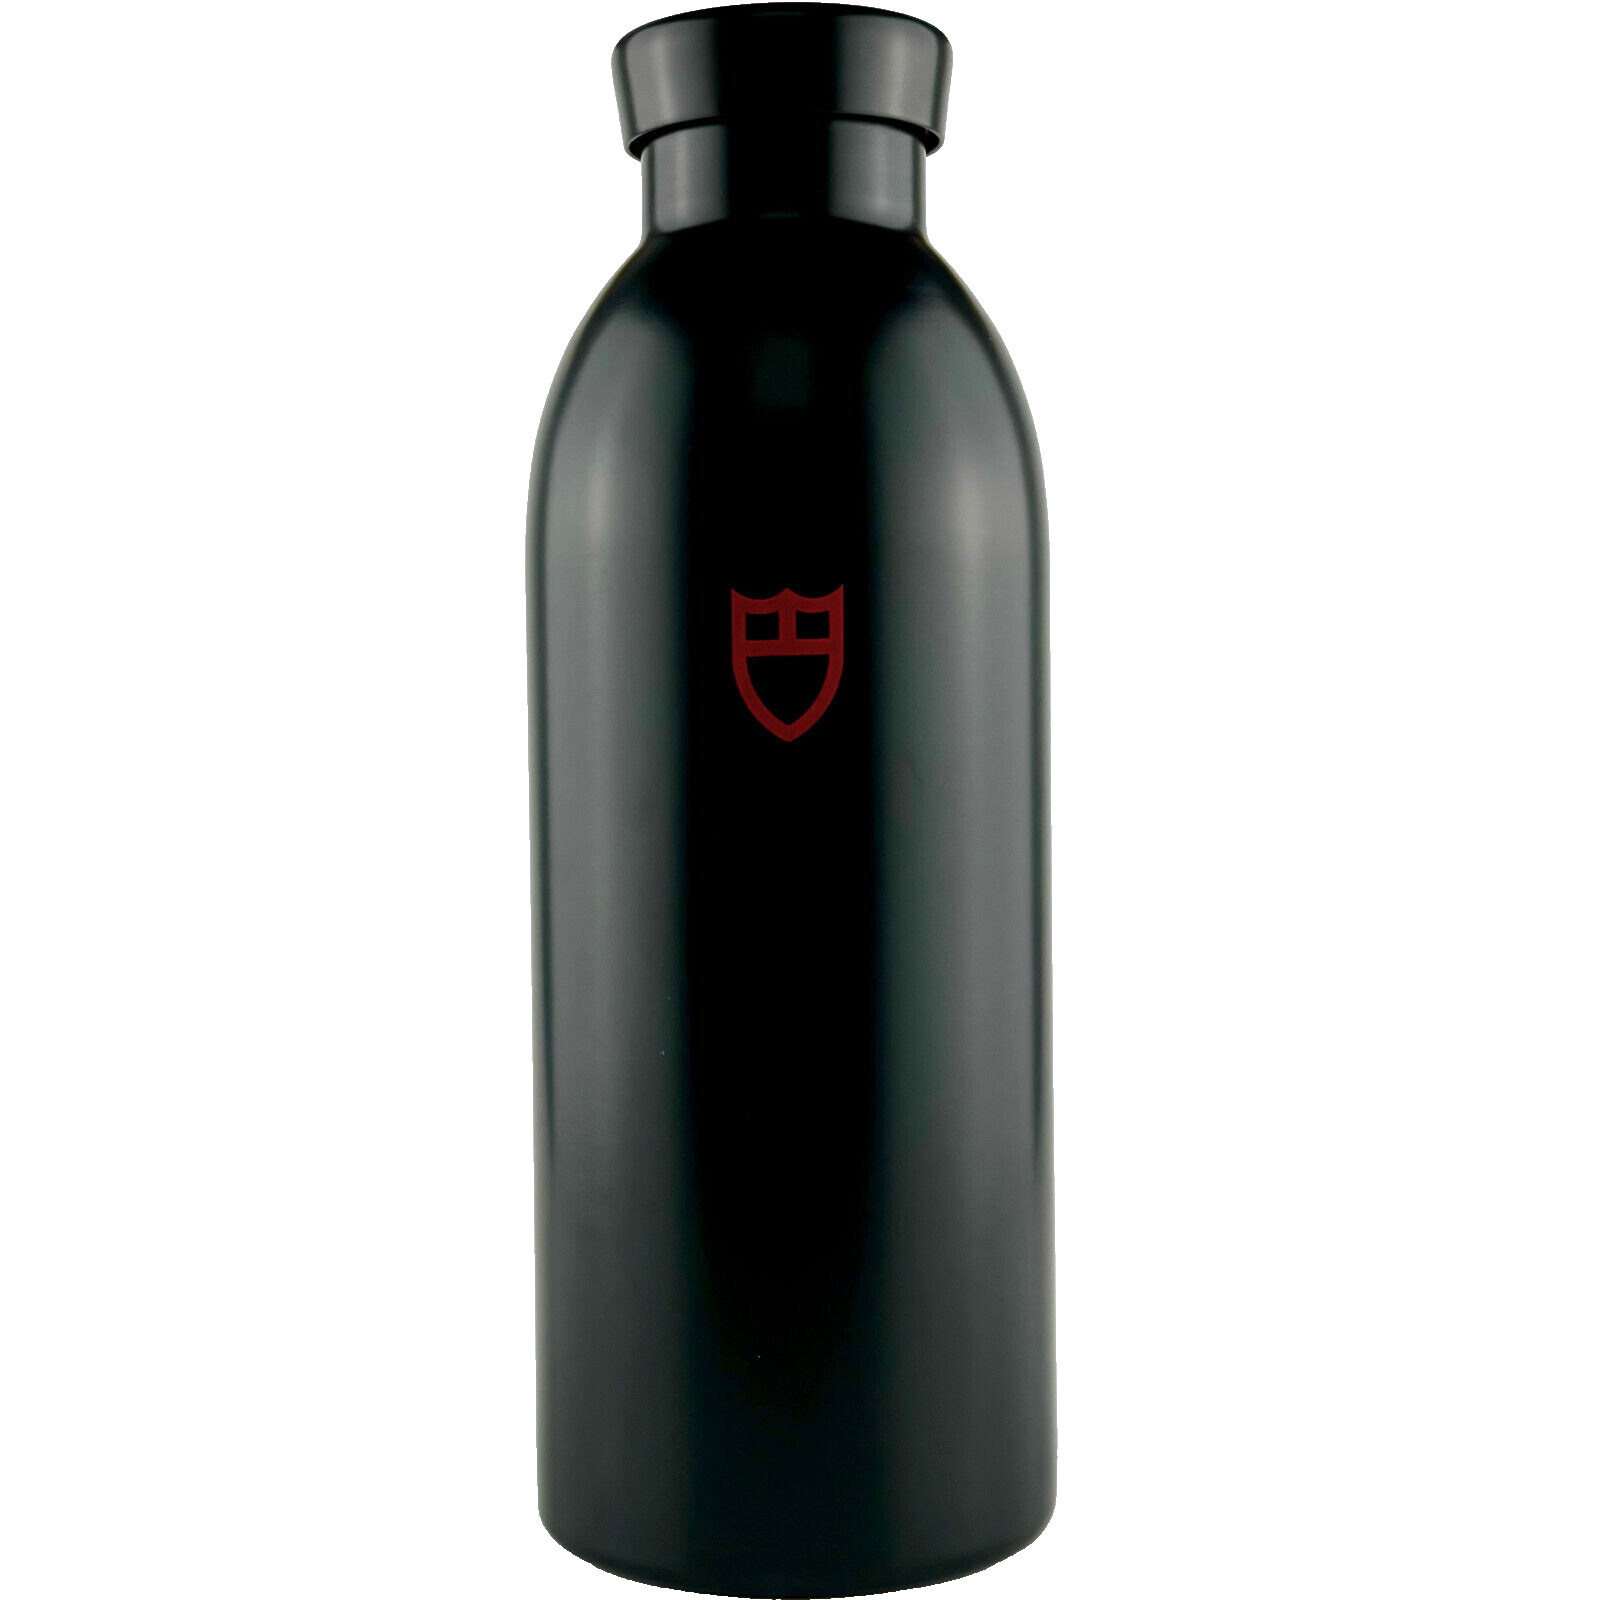 Tudor Thermo-Isolierflasche Thermoskanne insulated bottle Black Kanne Flasche Trinkflasche Teekanne Kanne Kaffeekanne